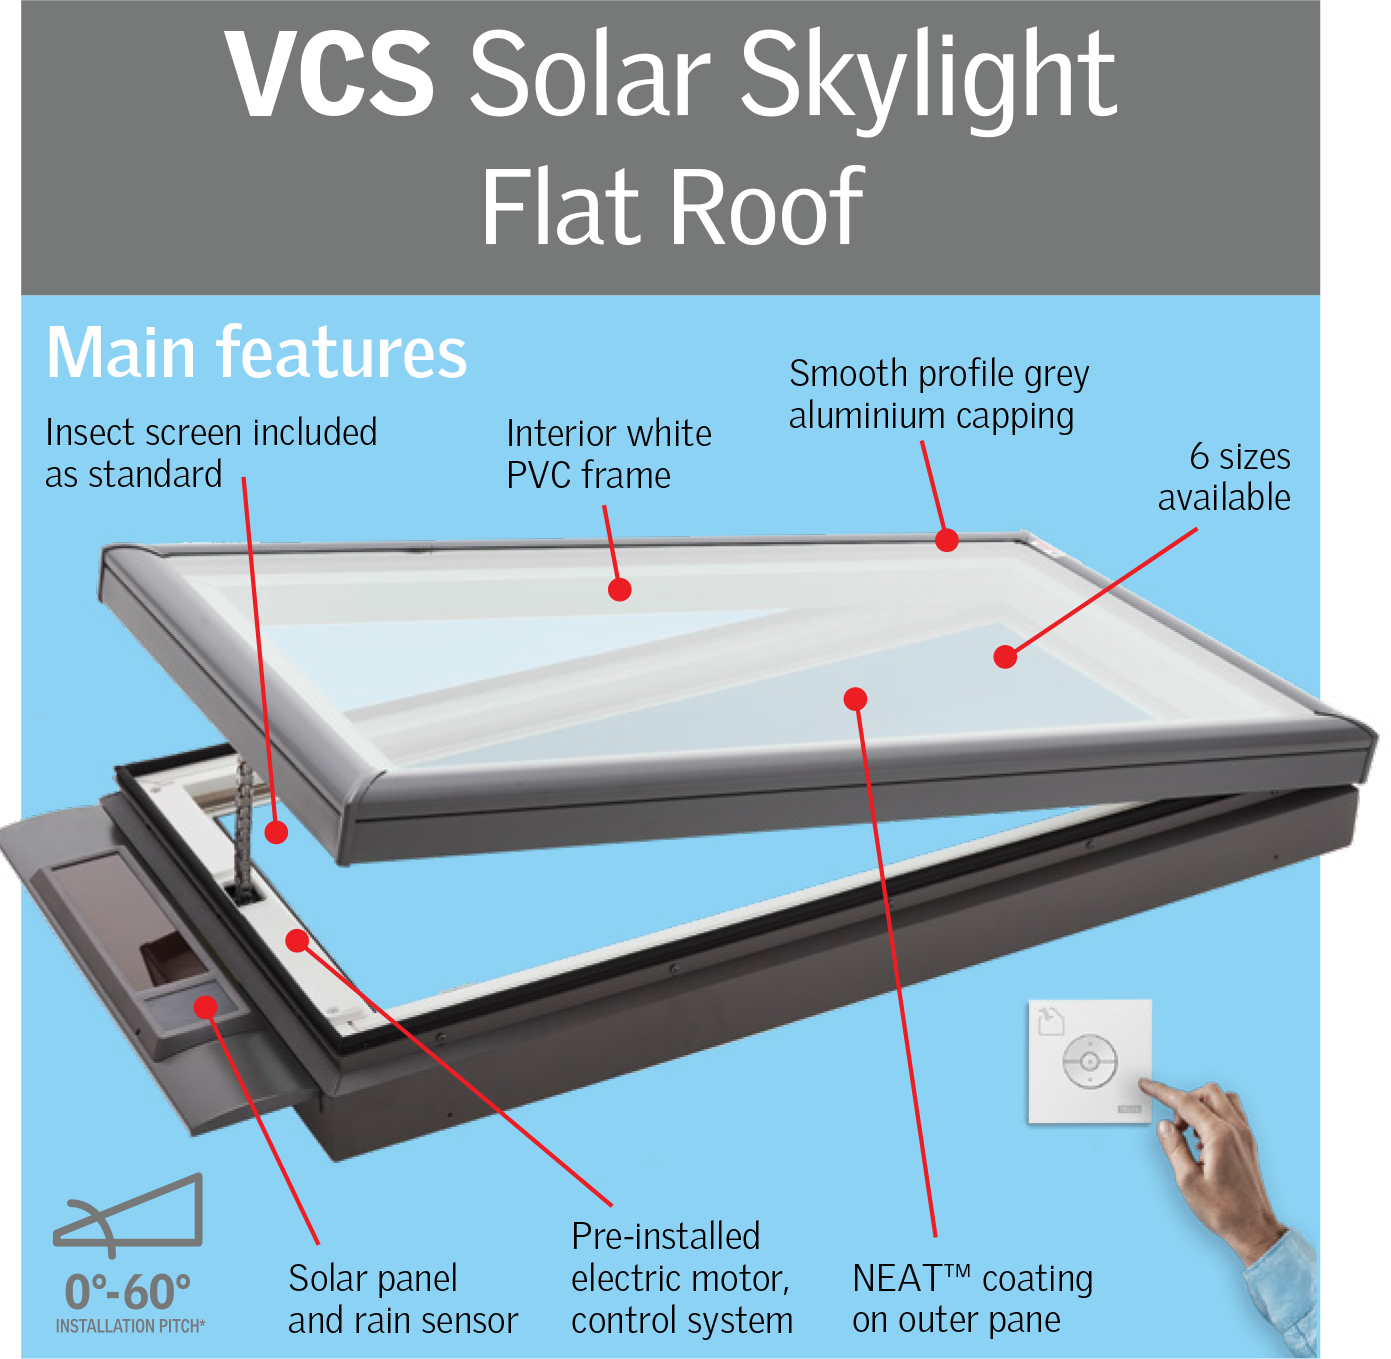 VCS-Solar-Skylight-Flat-Roof